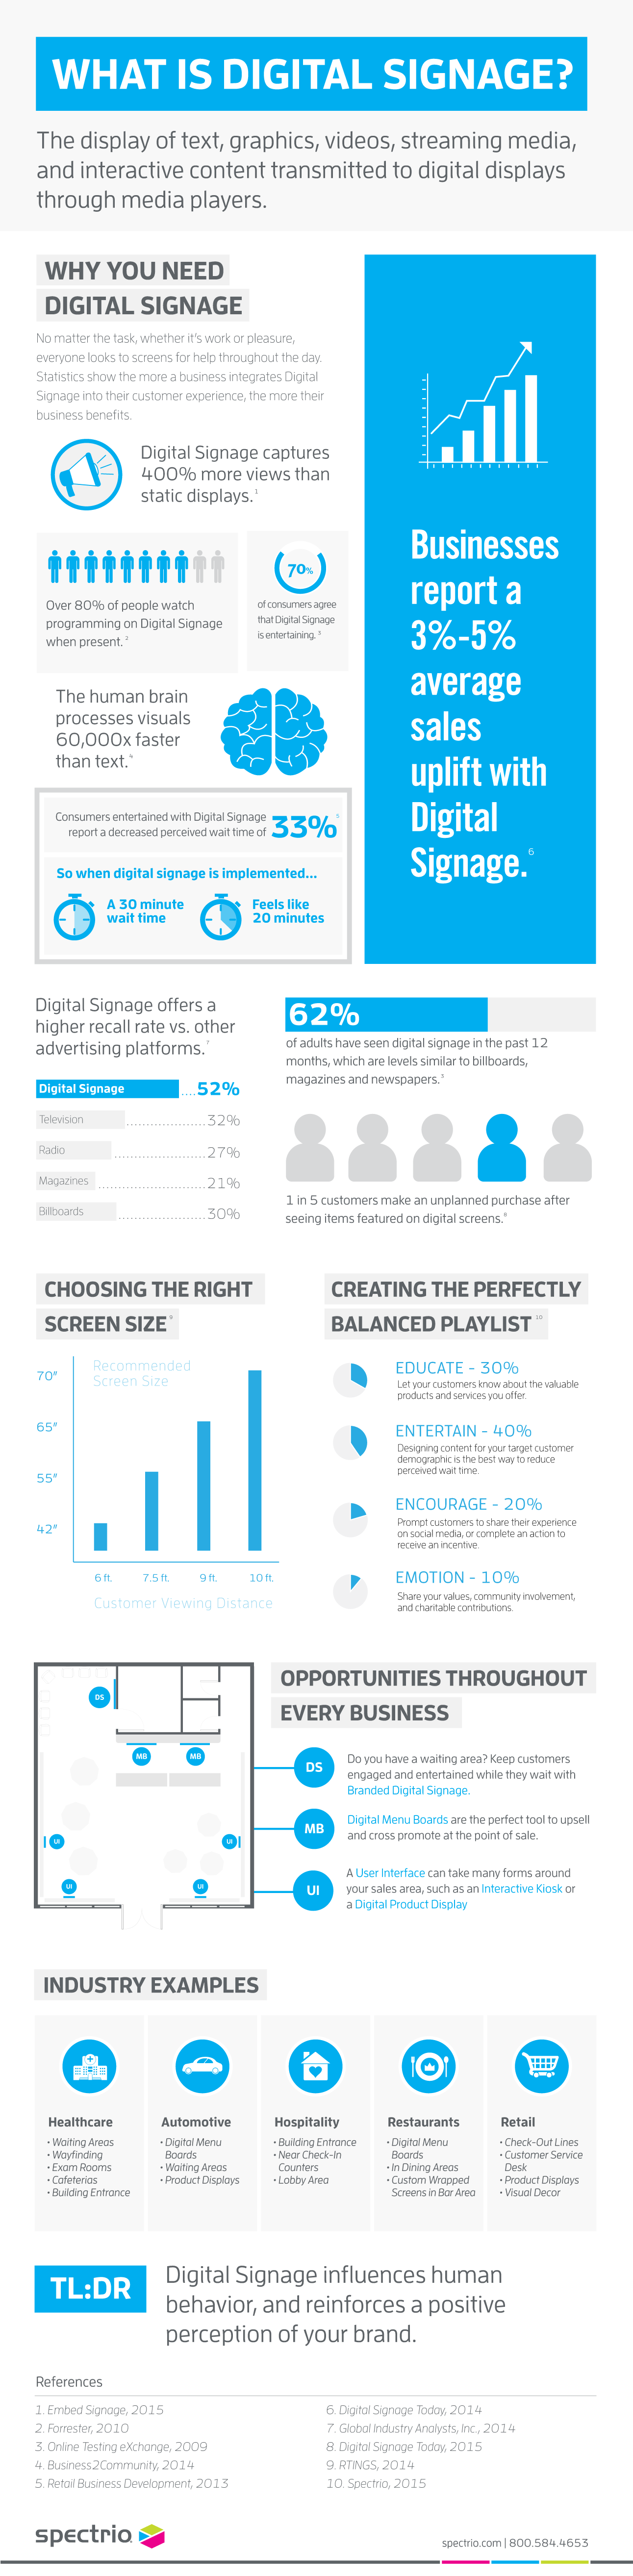 digital signage infographic